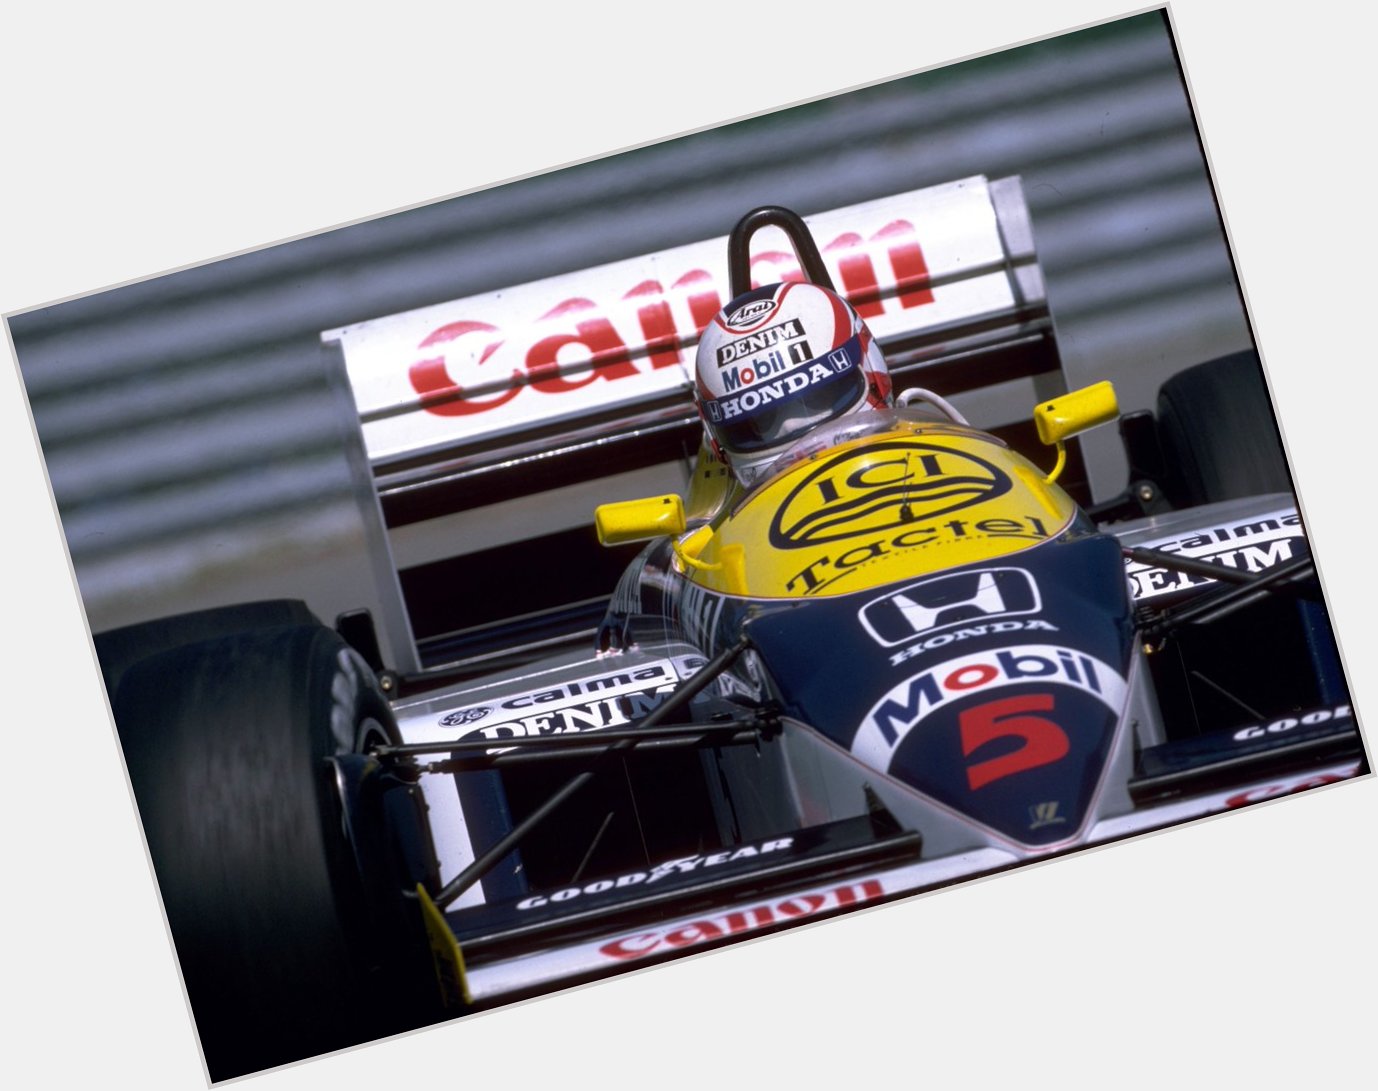 Happy birthday Nigel Mansell! The Red 5! 